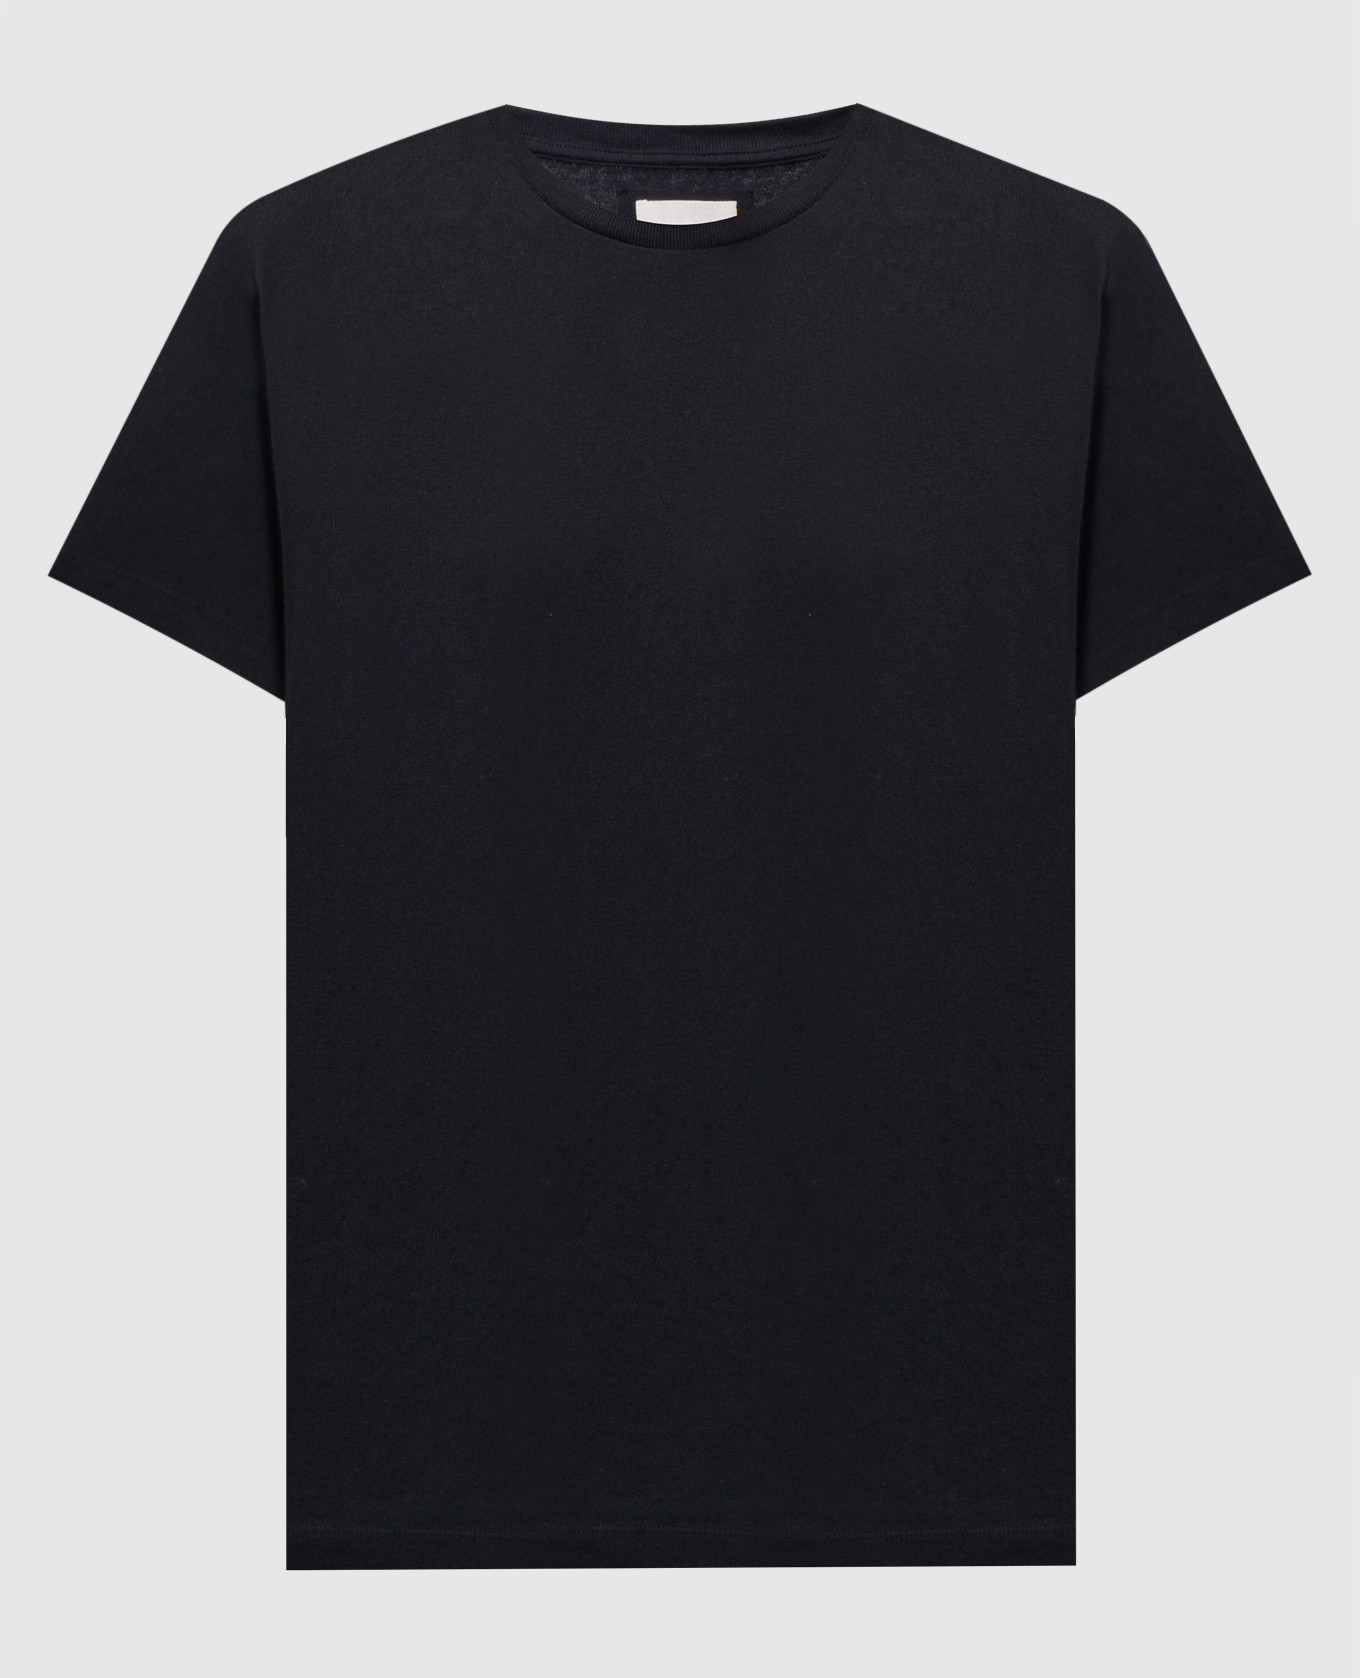 Emmylou black t-shirt with logo patch